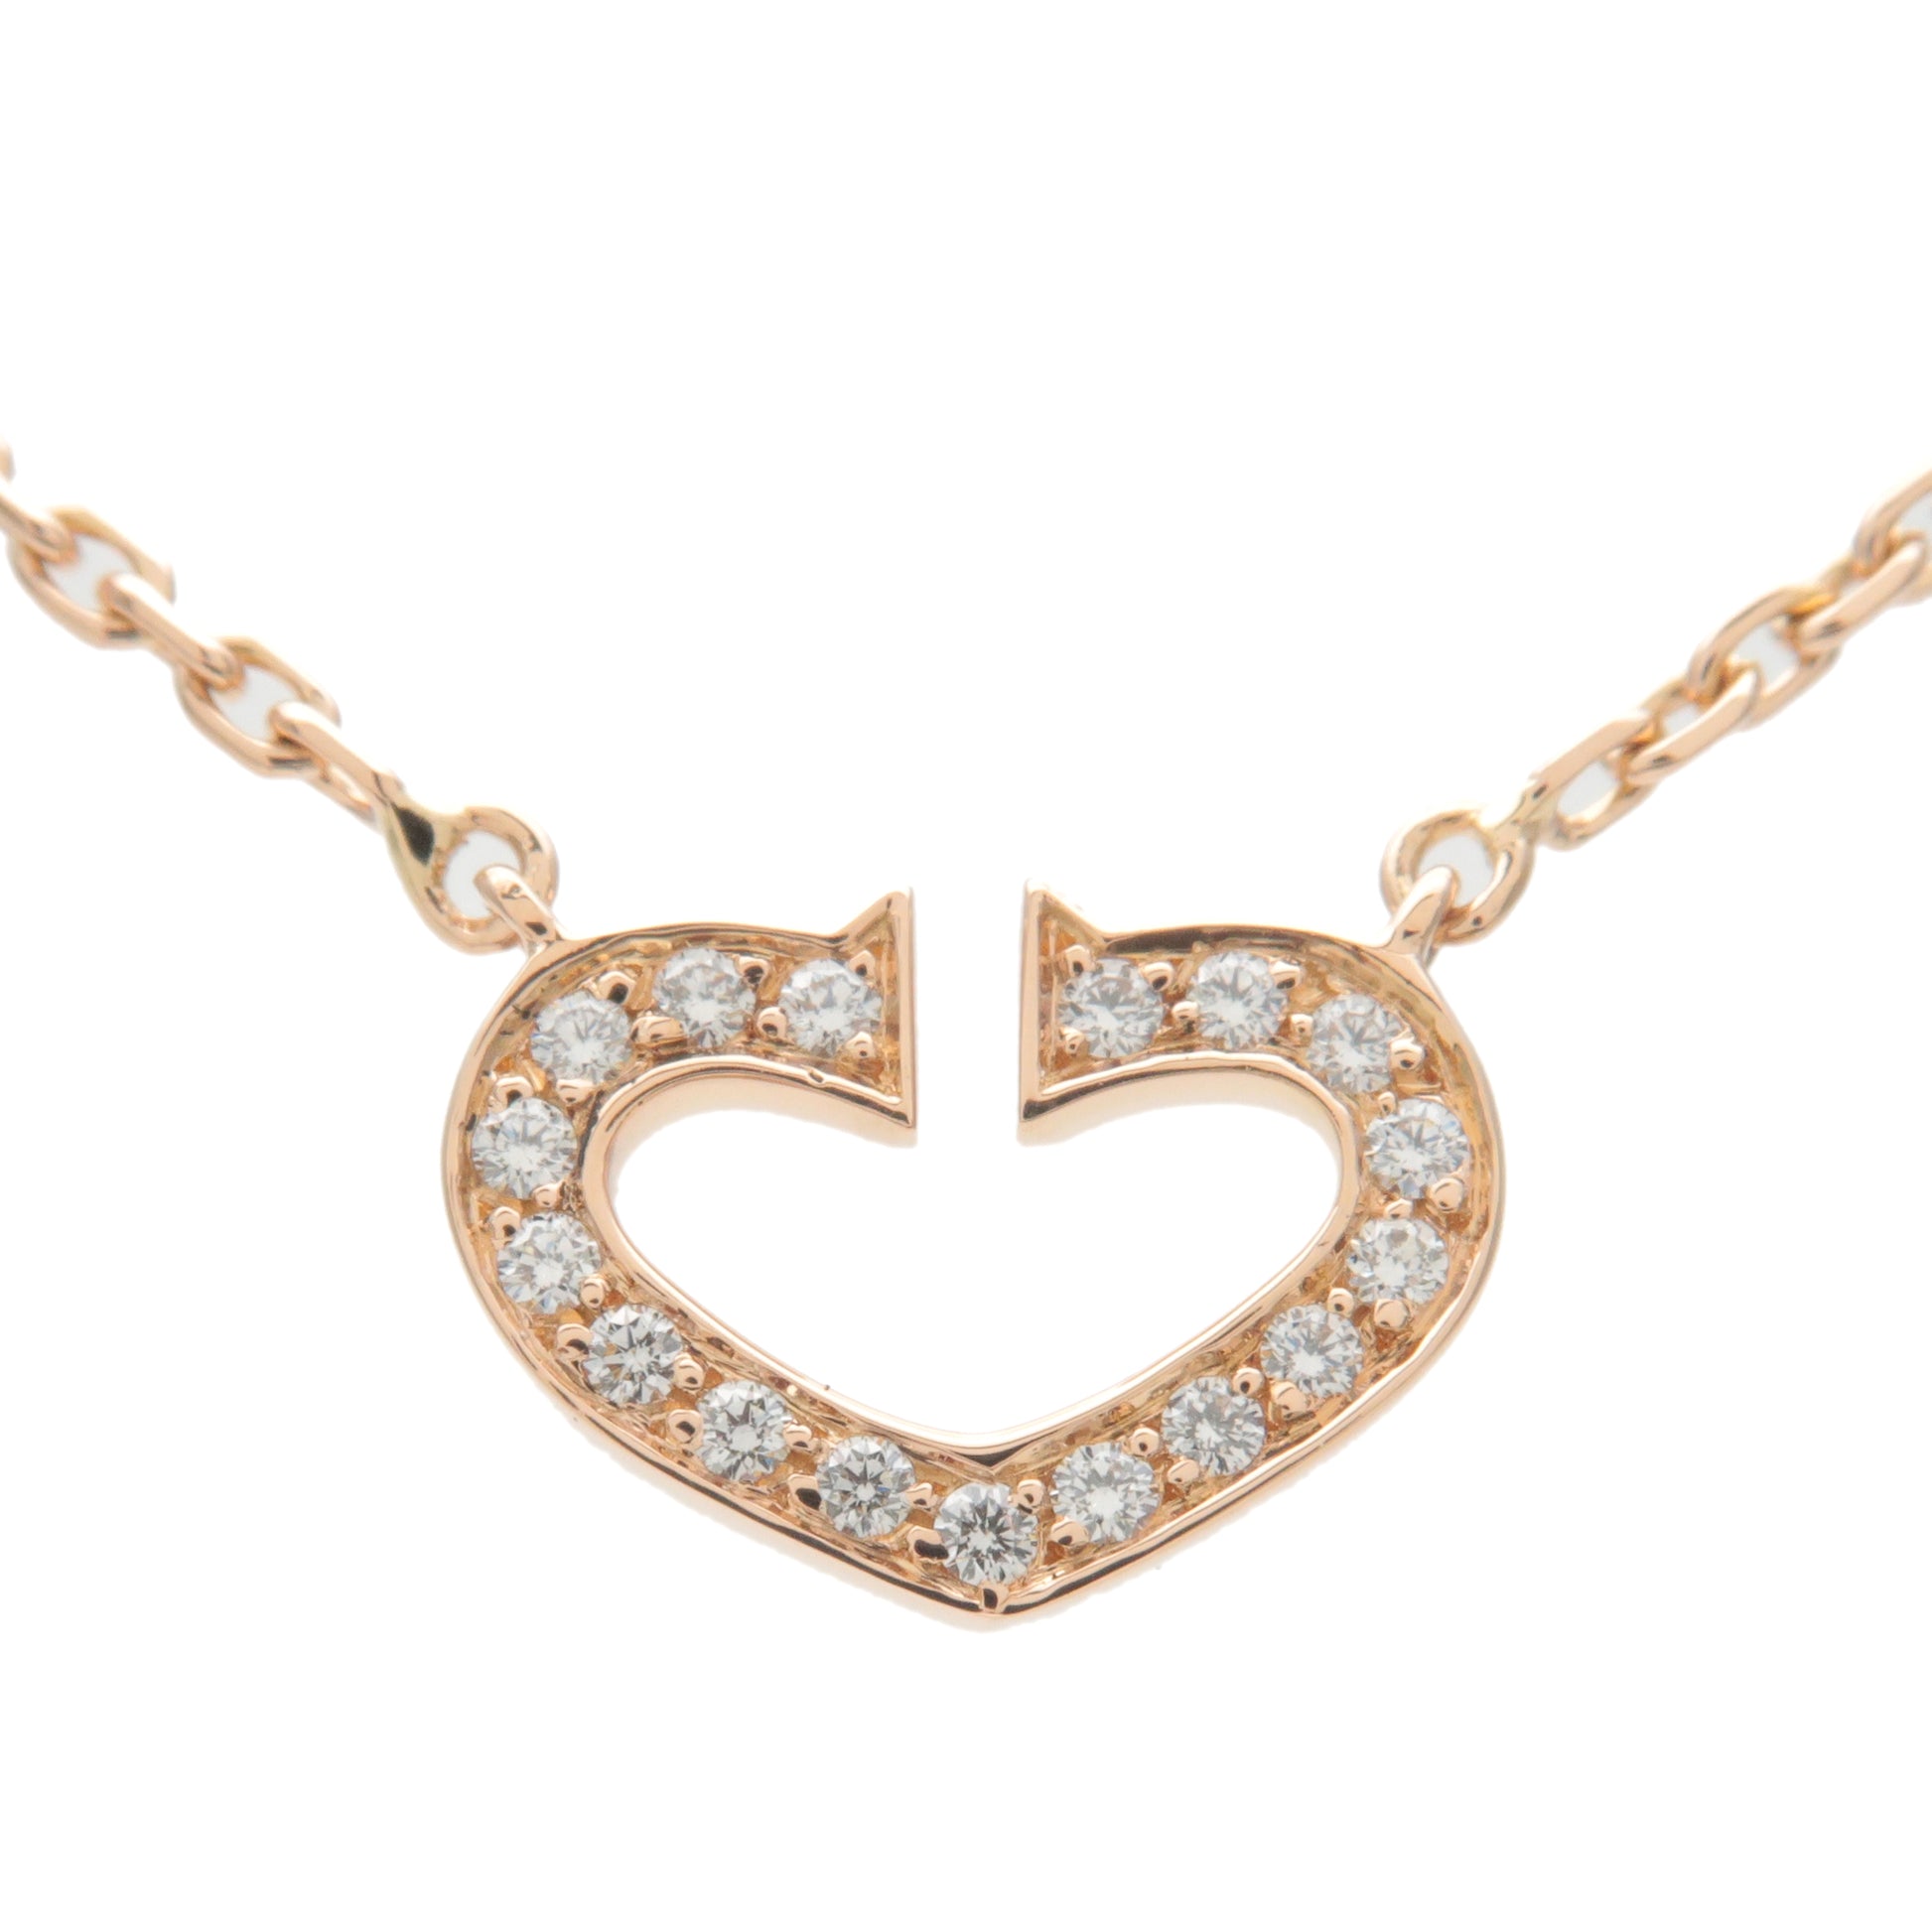 Cartier-C-Heart-Diamond-Necklace-SM-K18PG-750PG-Rose-Gold